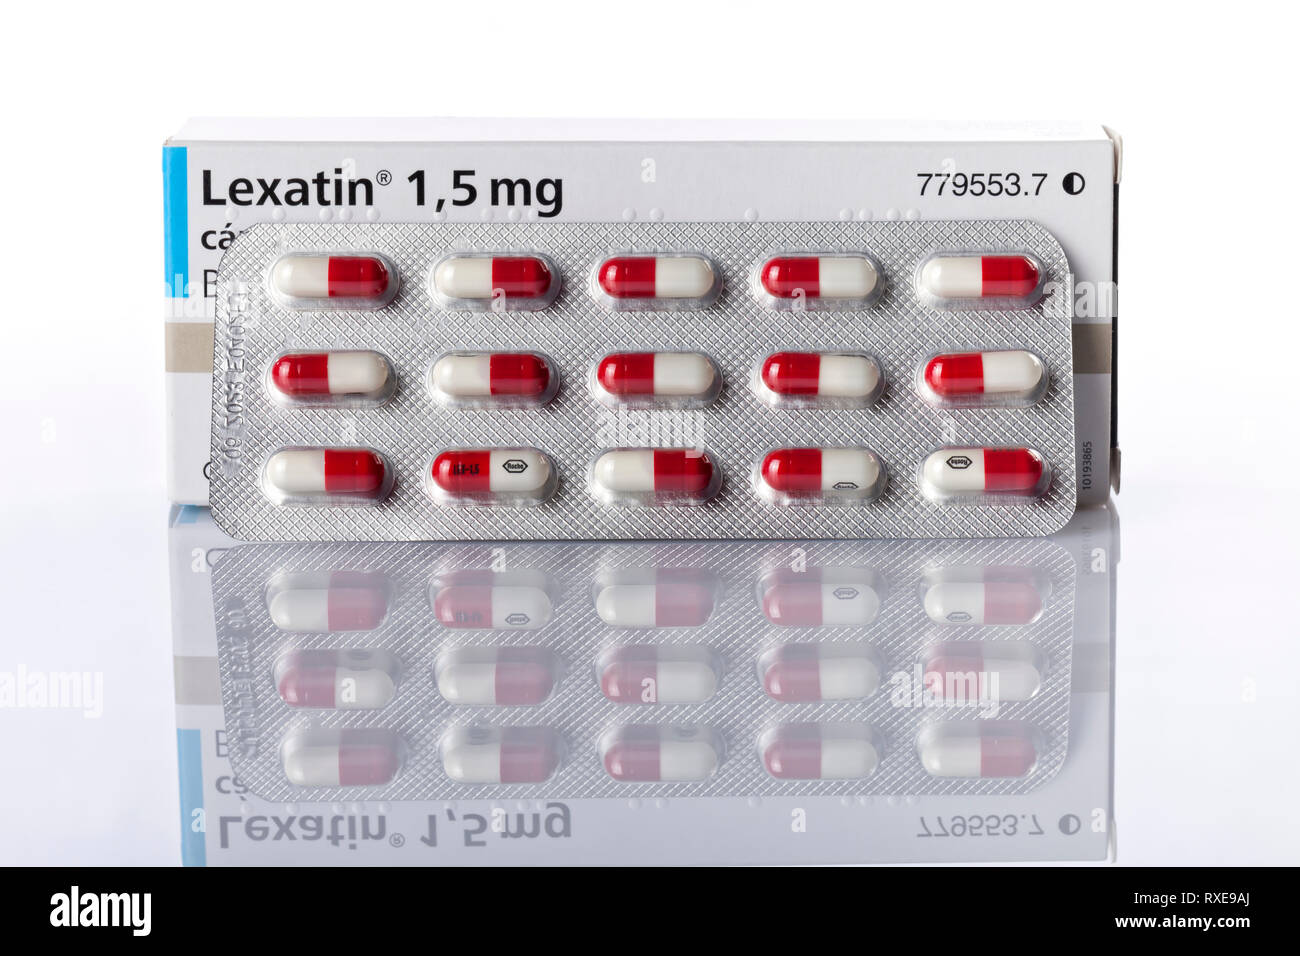 COMPRAR LEXATIN 1.5mg , COMPRAR RUBIFEN sin receta